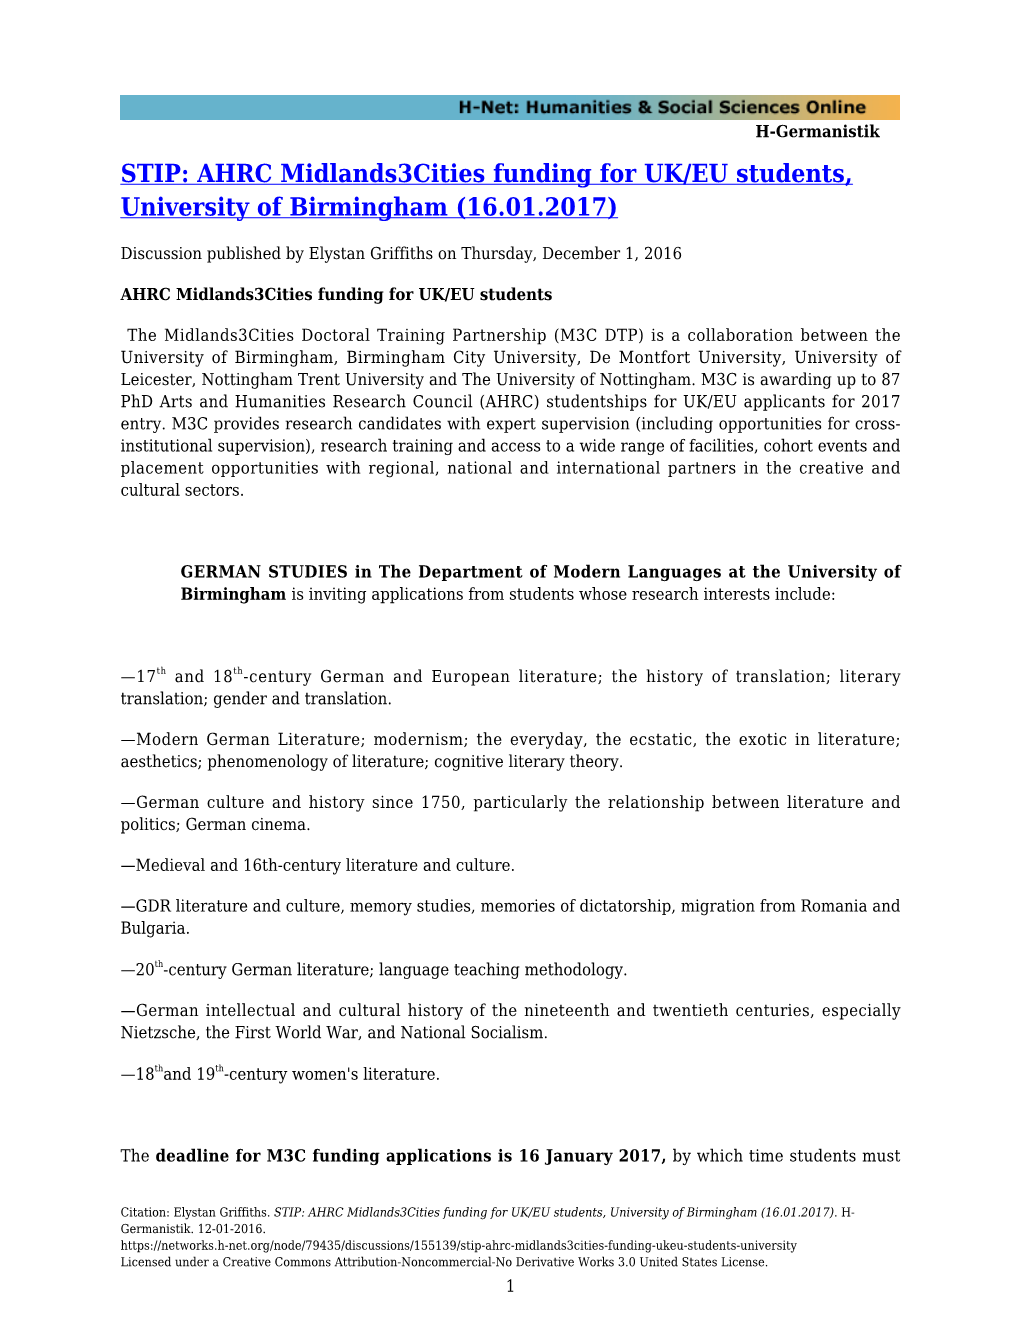 AHRC Midlands3cities Funding for UK/EU Students, University of Birmingham (16.01.2017)